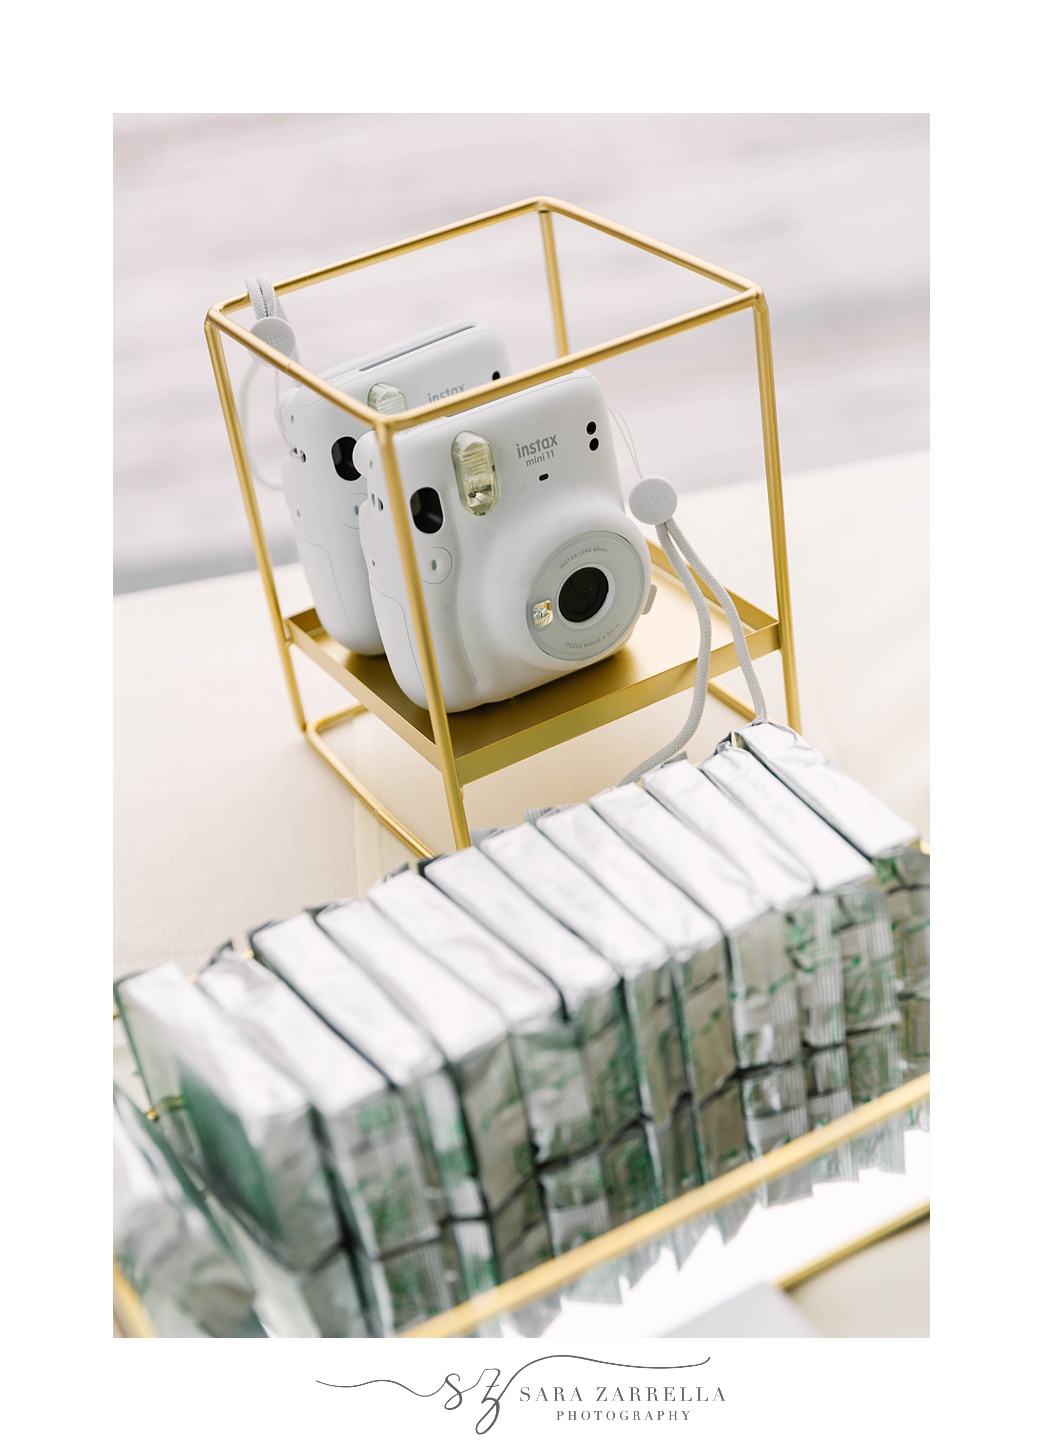 Polaroid camera for guest book for RI wedding reception 